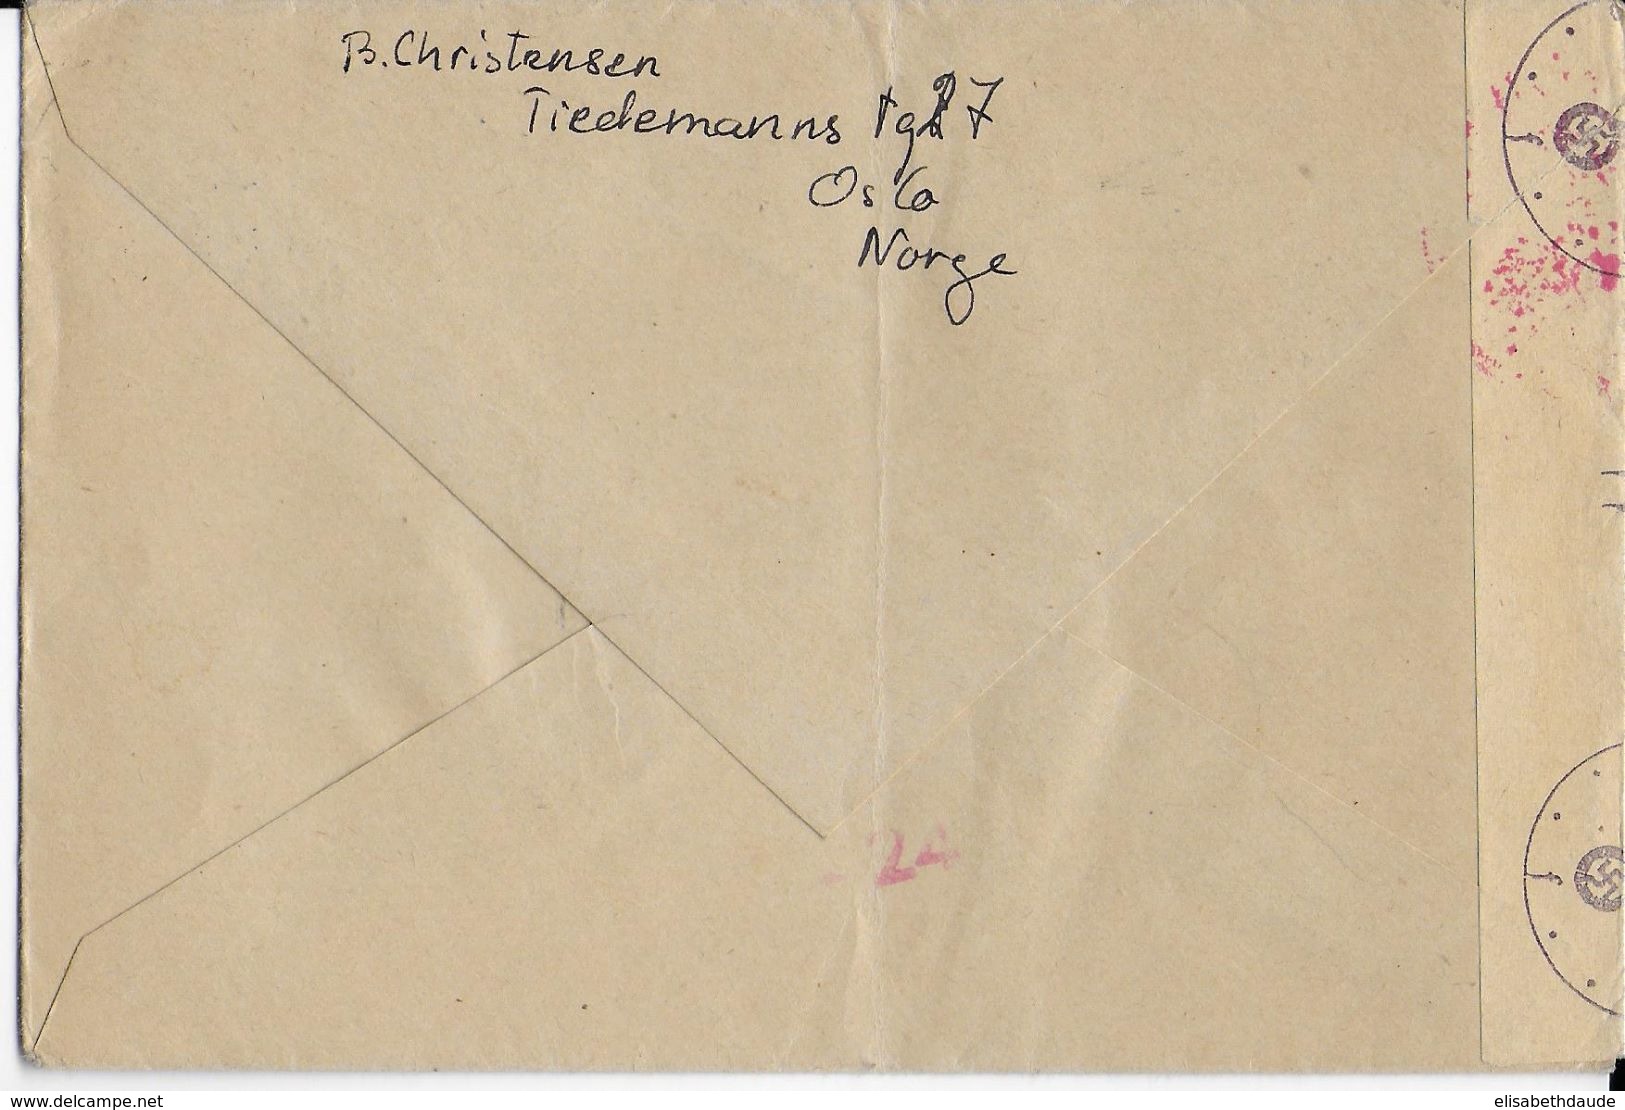 NORVEGE - 1943 - ENVELOPPE CENSUREE Par AVION De OSLO => BOULOGNE - Briefe U. Dokumente